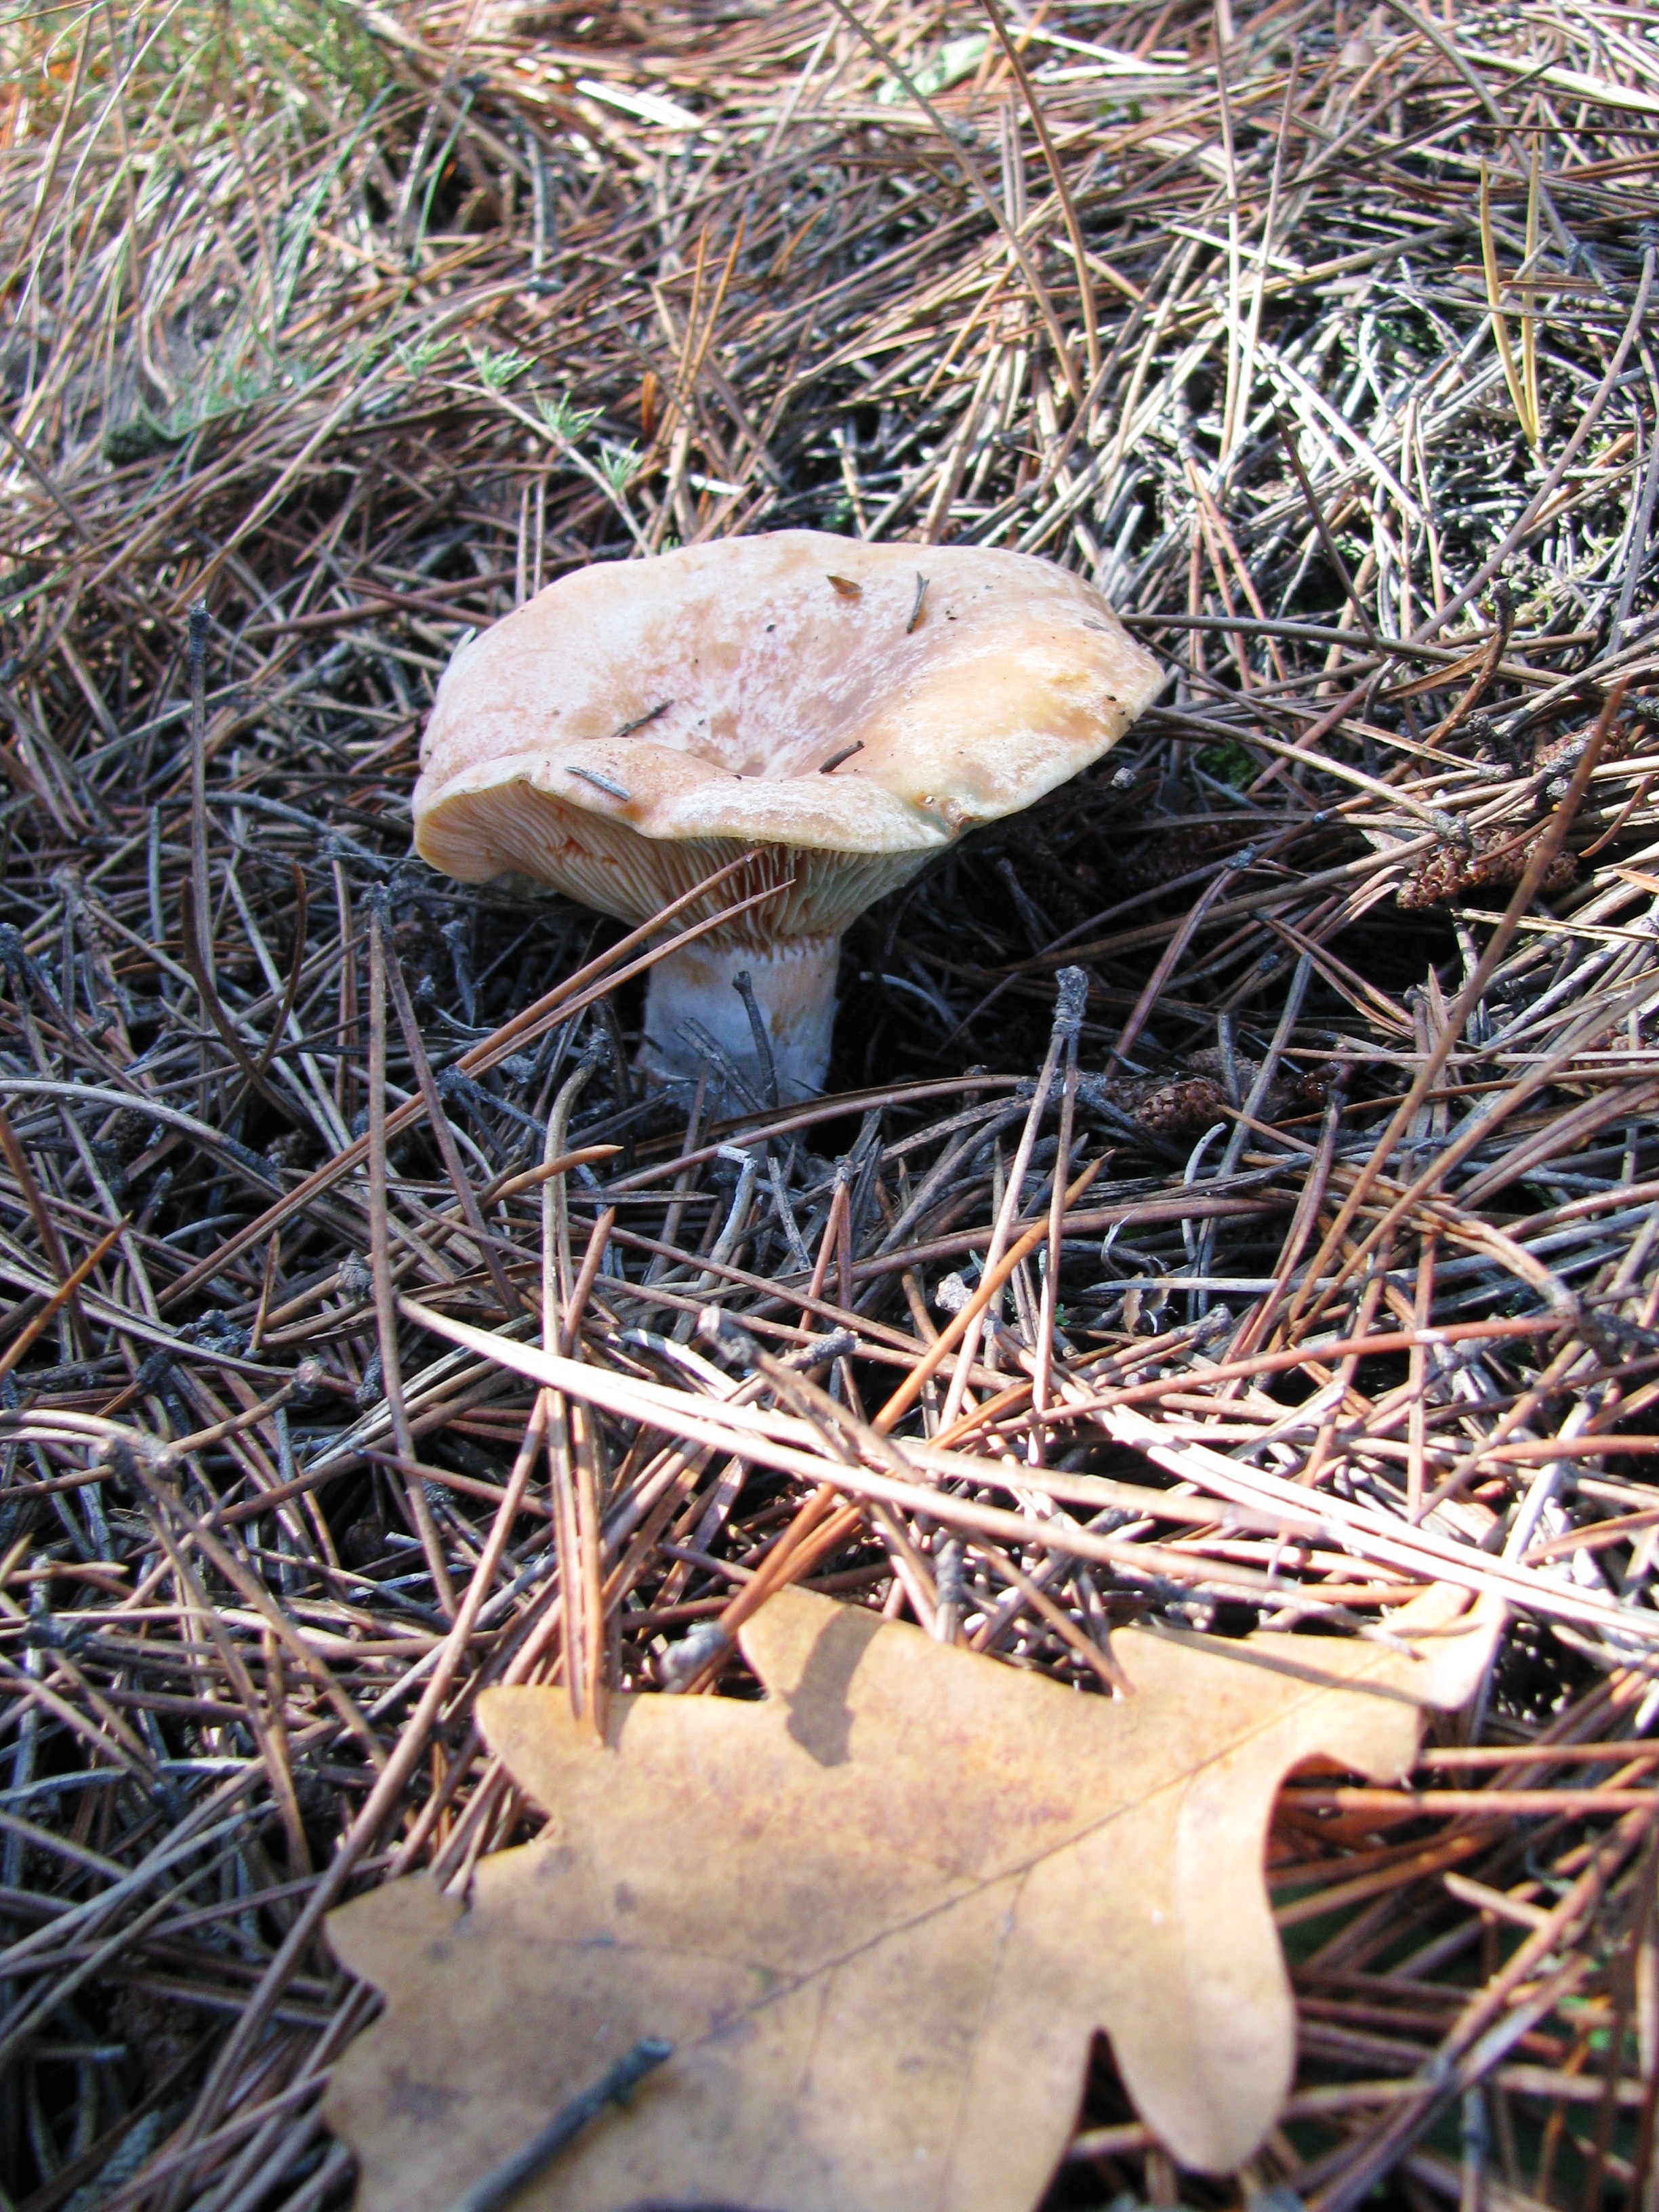 Edible mushroom manar